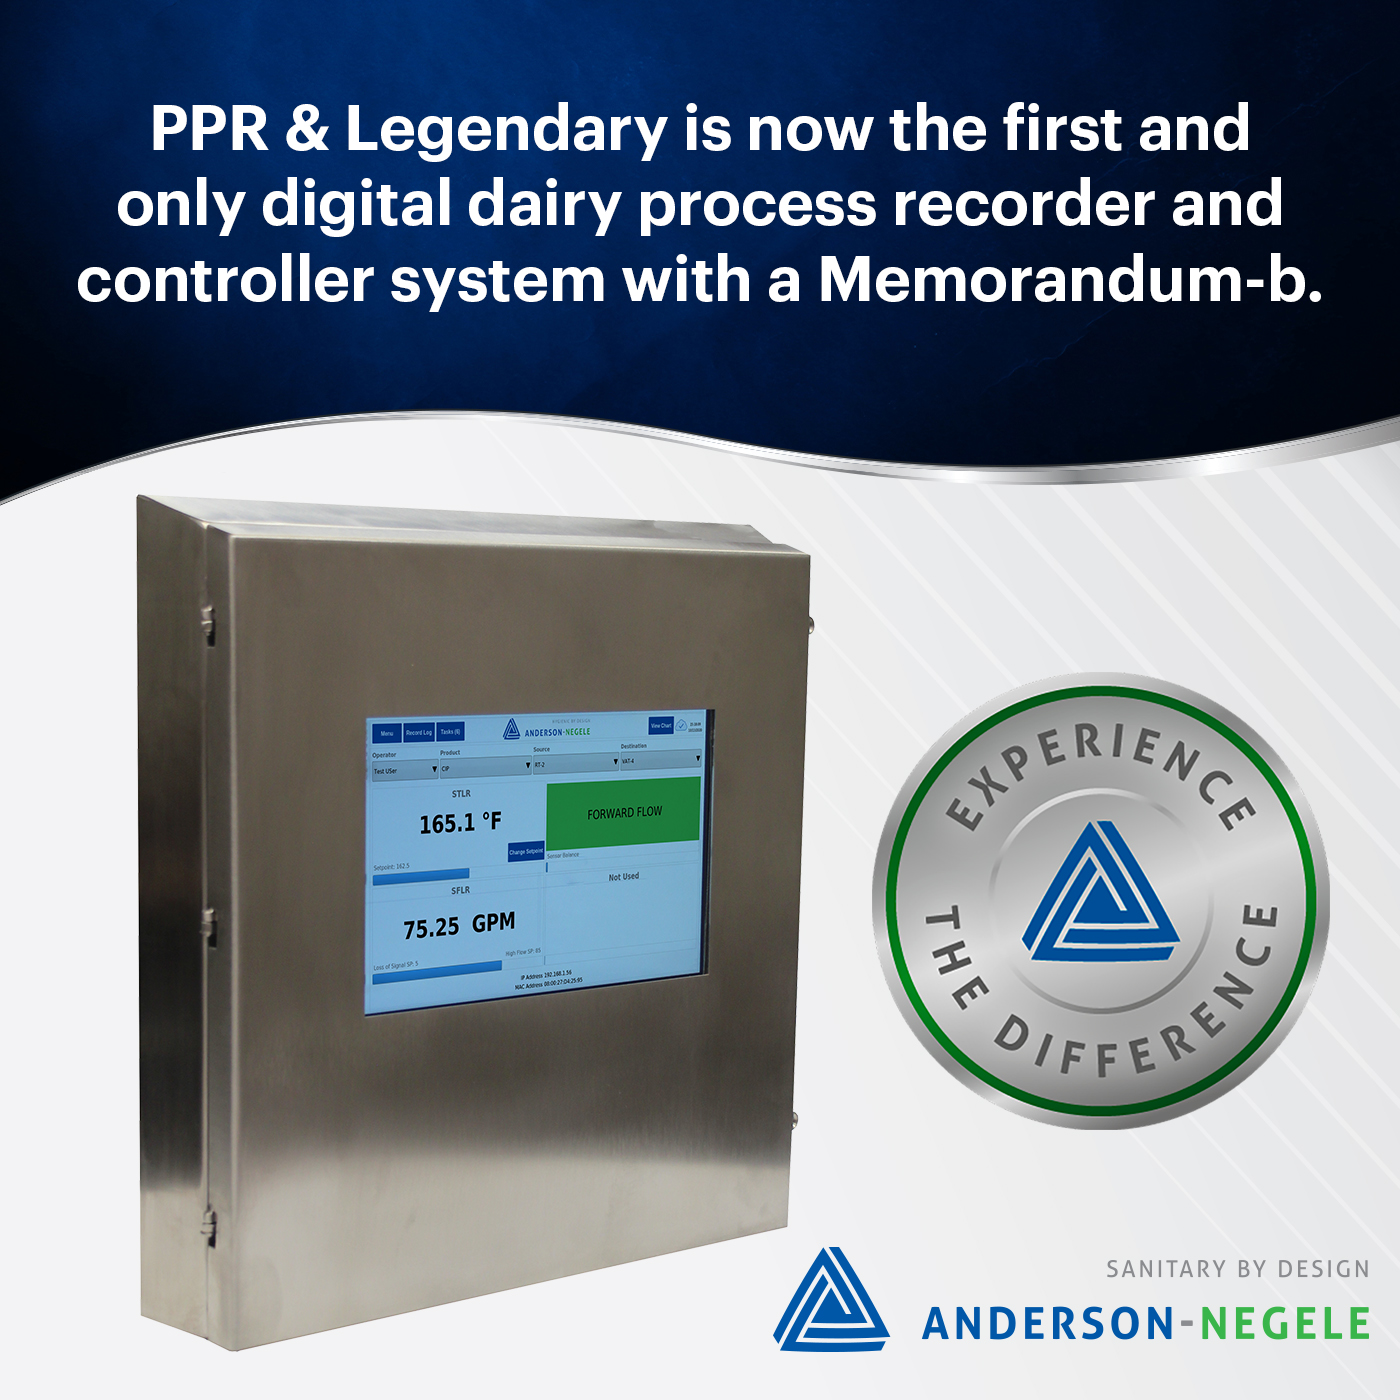 Anderson-Negele’s Paperless Process Recorder Receives FDA Memorandum-b